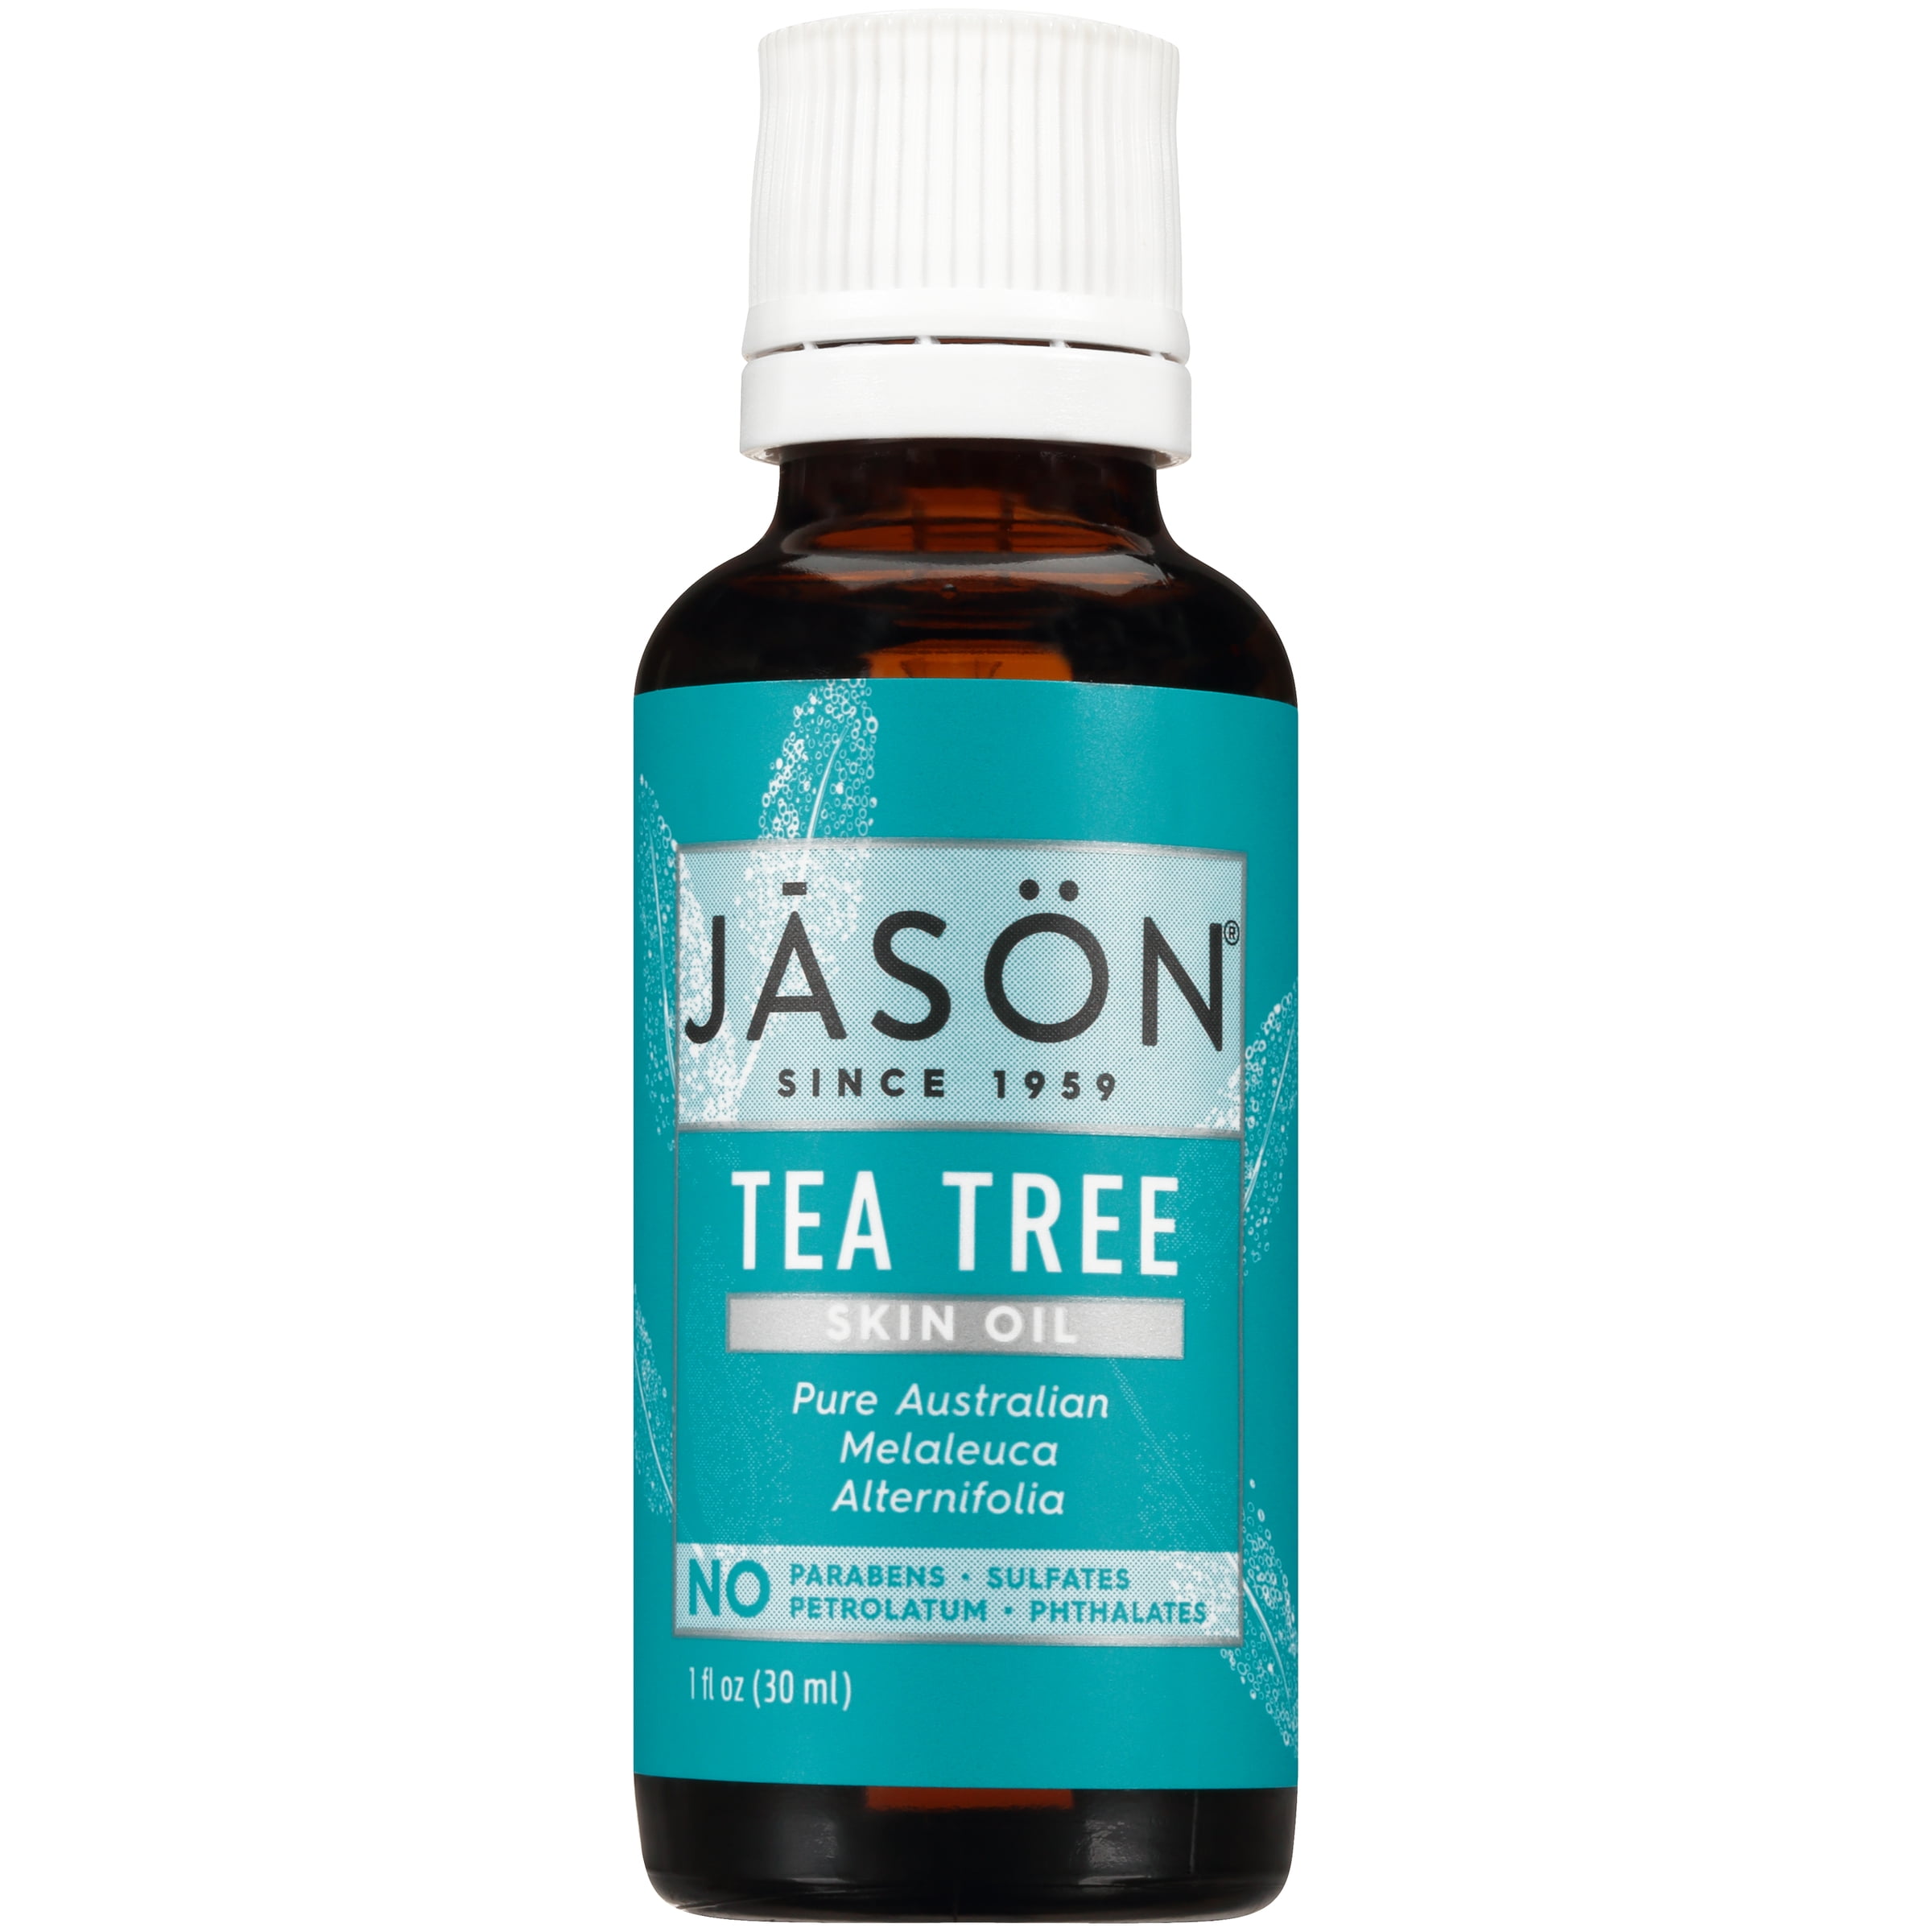 Mok club Heel JASON Tea Tree Oil, 1 Ounce Bottle - Walmart.com